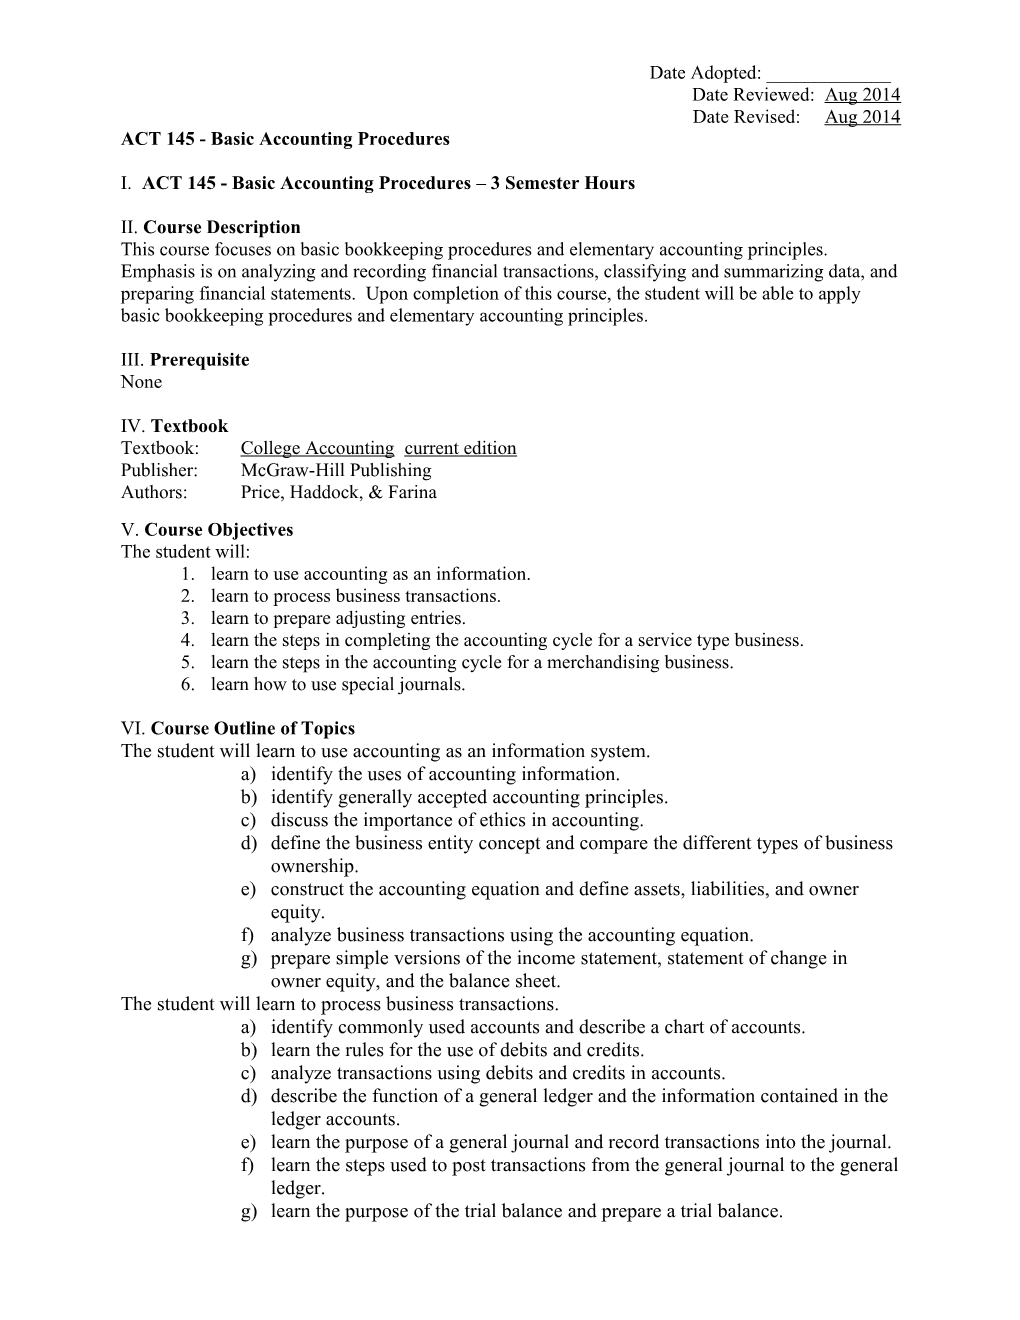 ACT145 - Basic Accounting Procedures